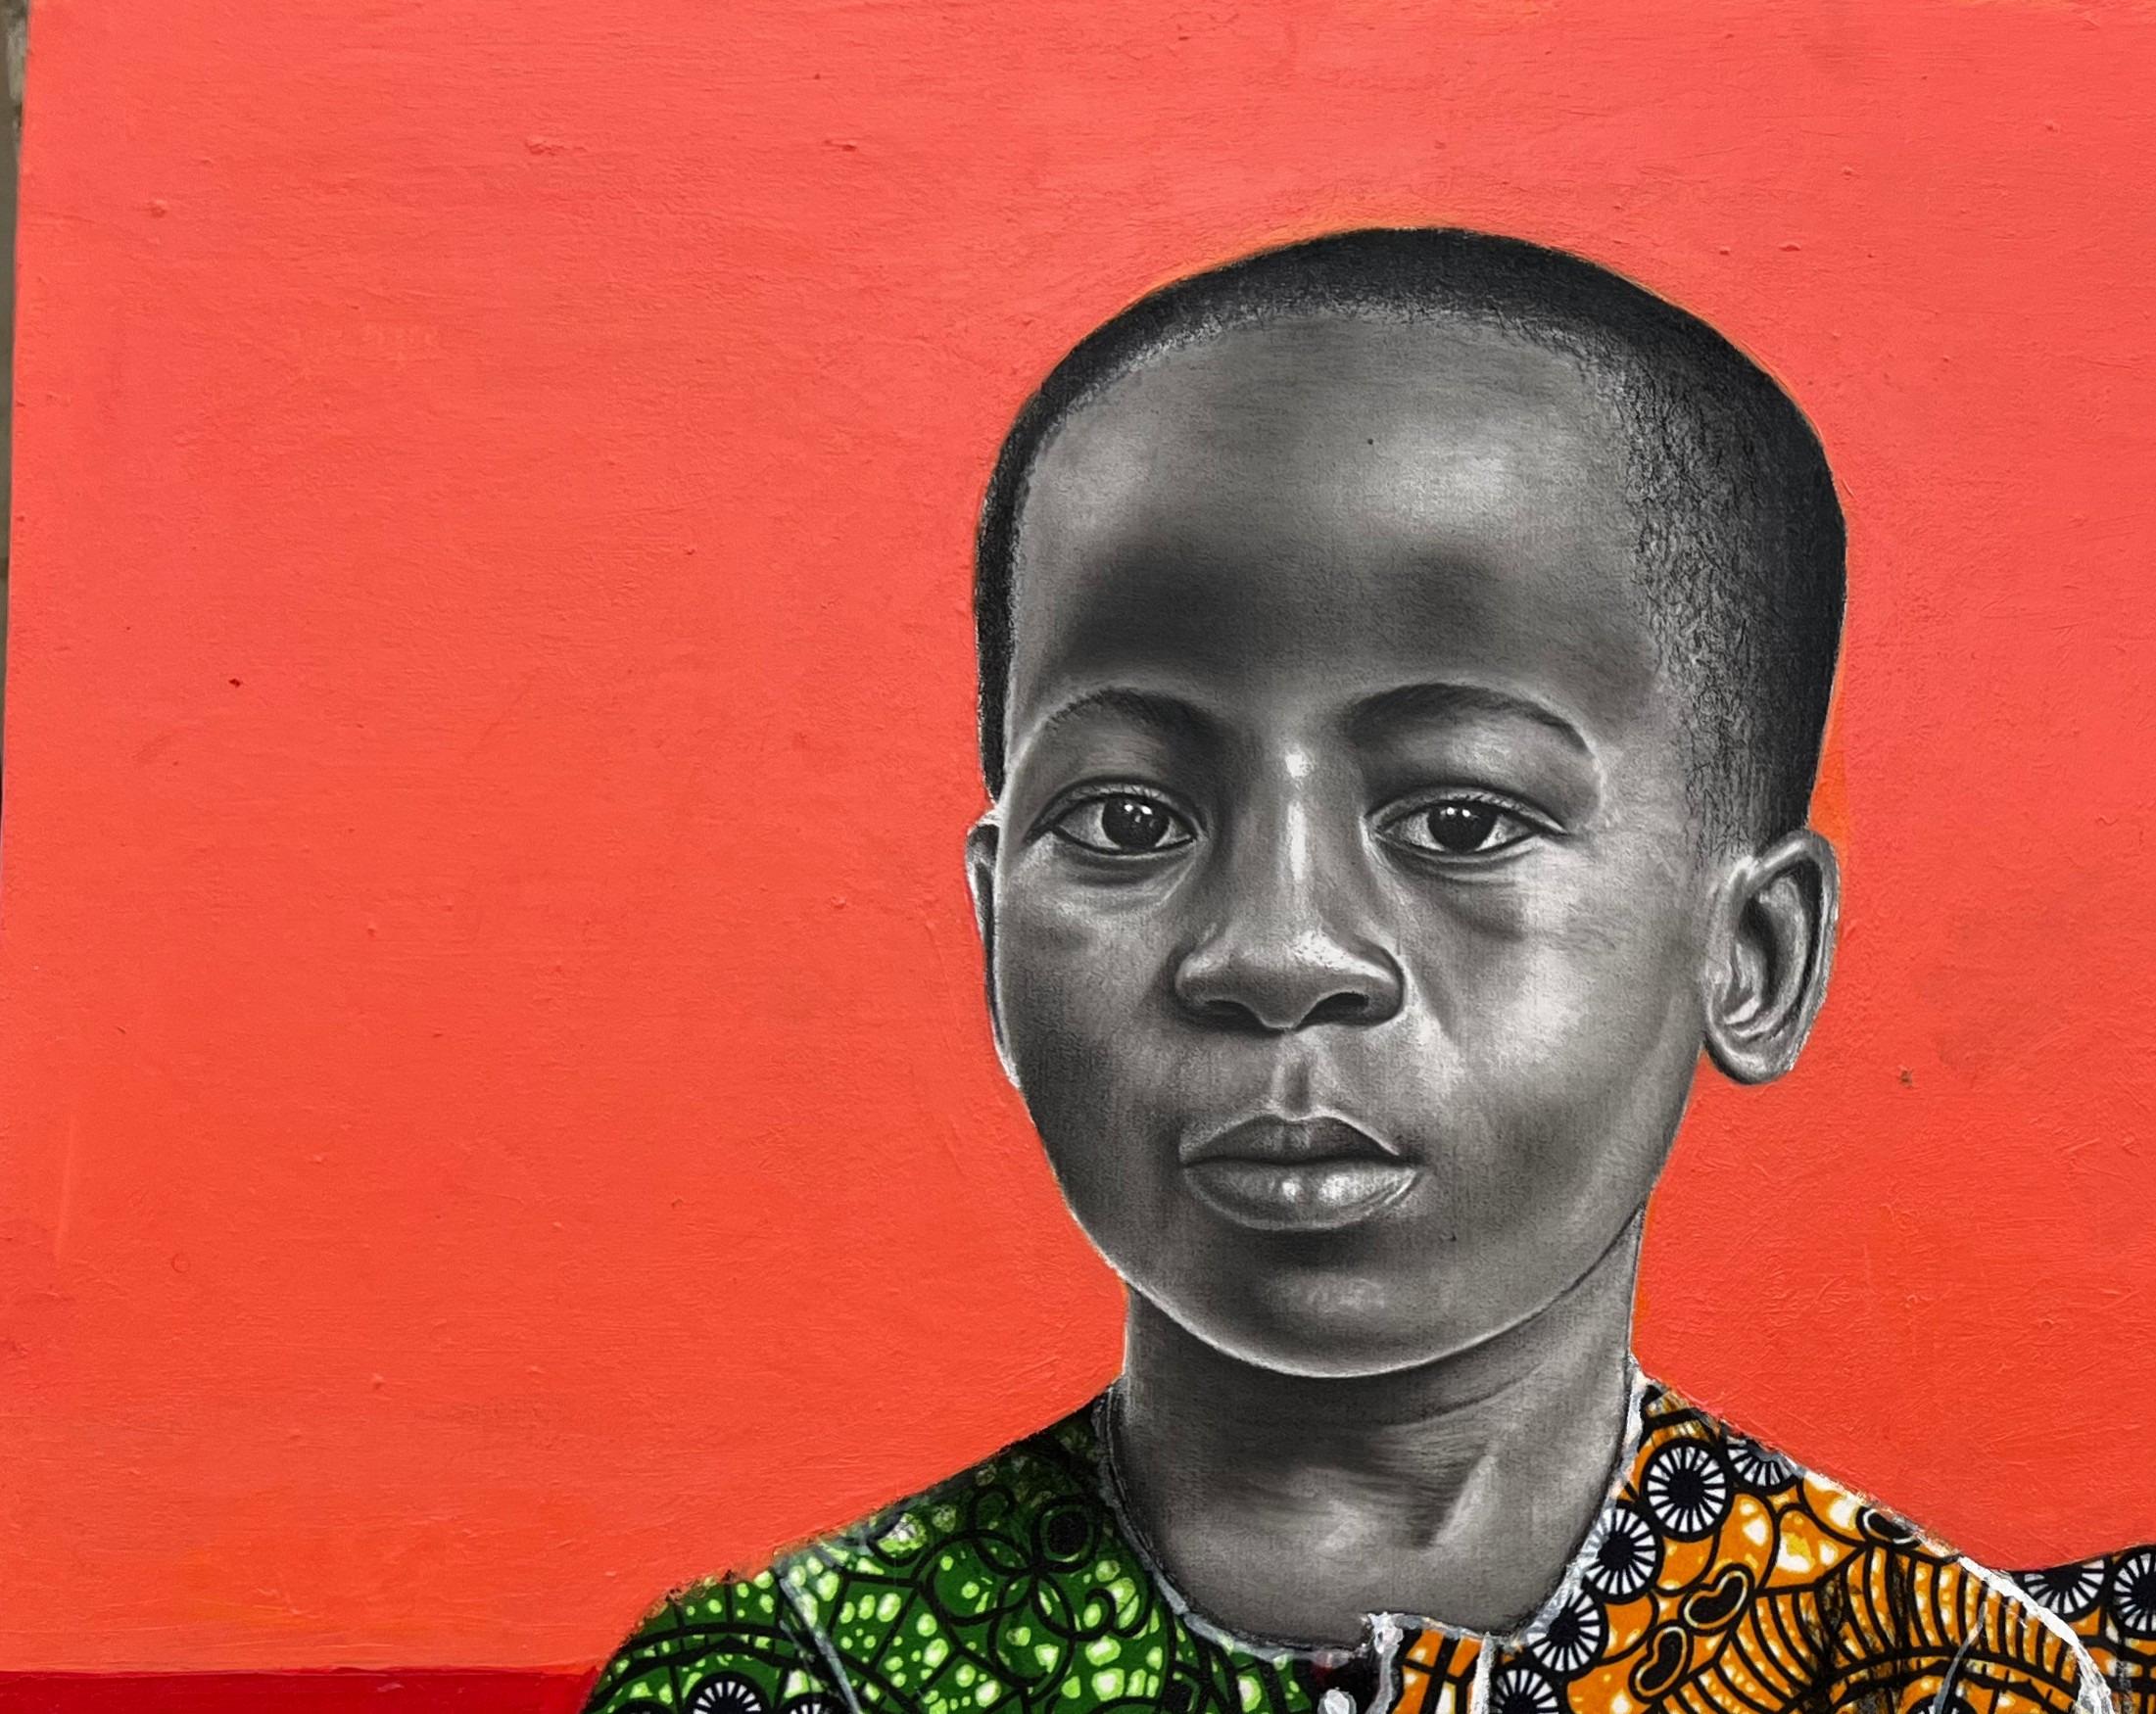 Frères - Painting de Ademola Clement Ajayi